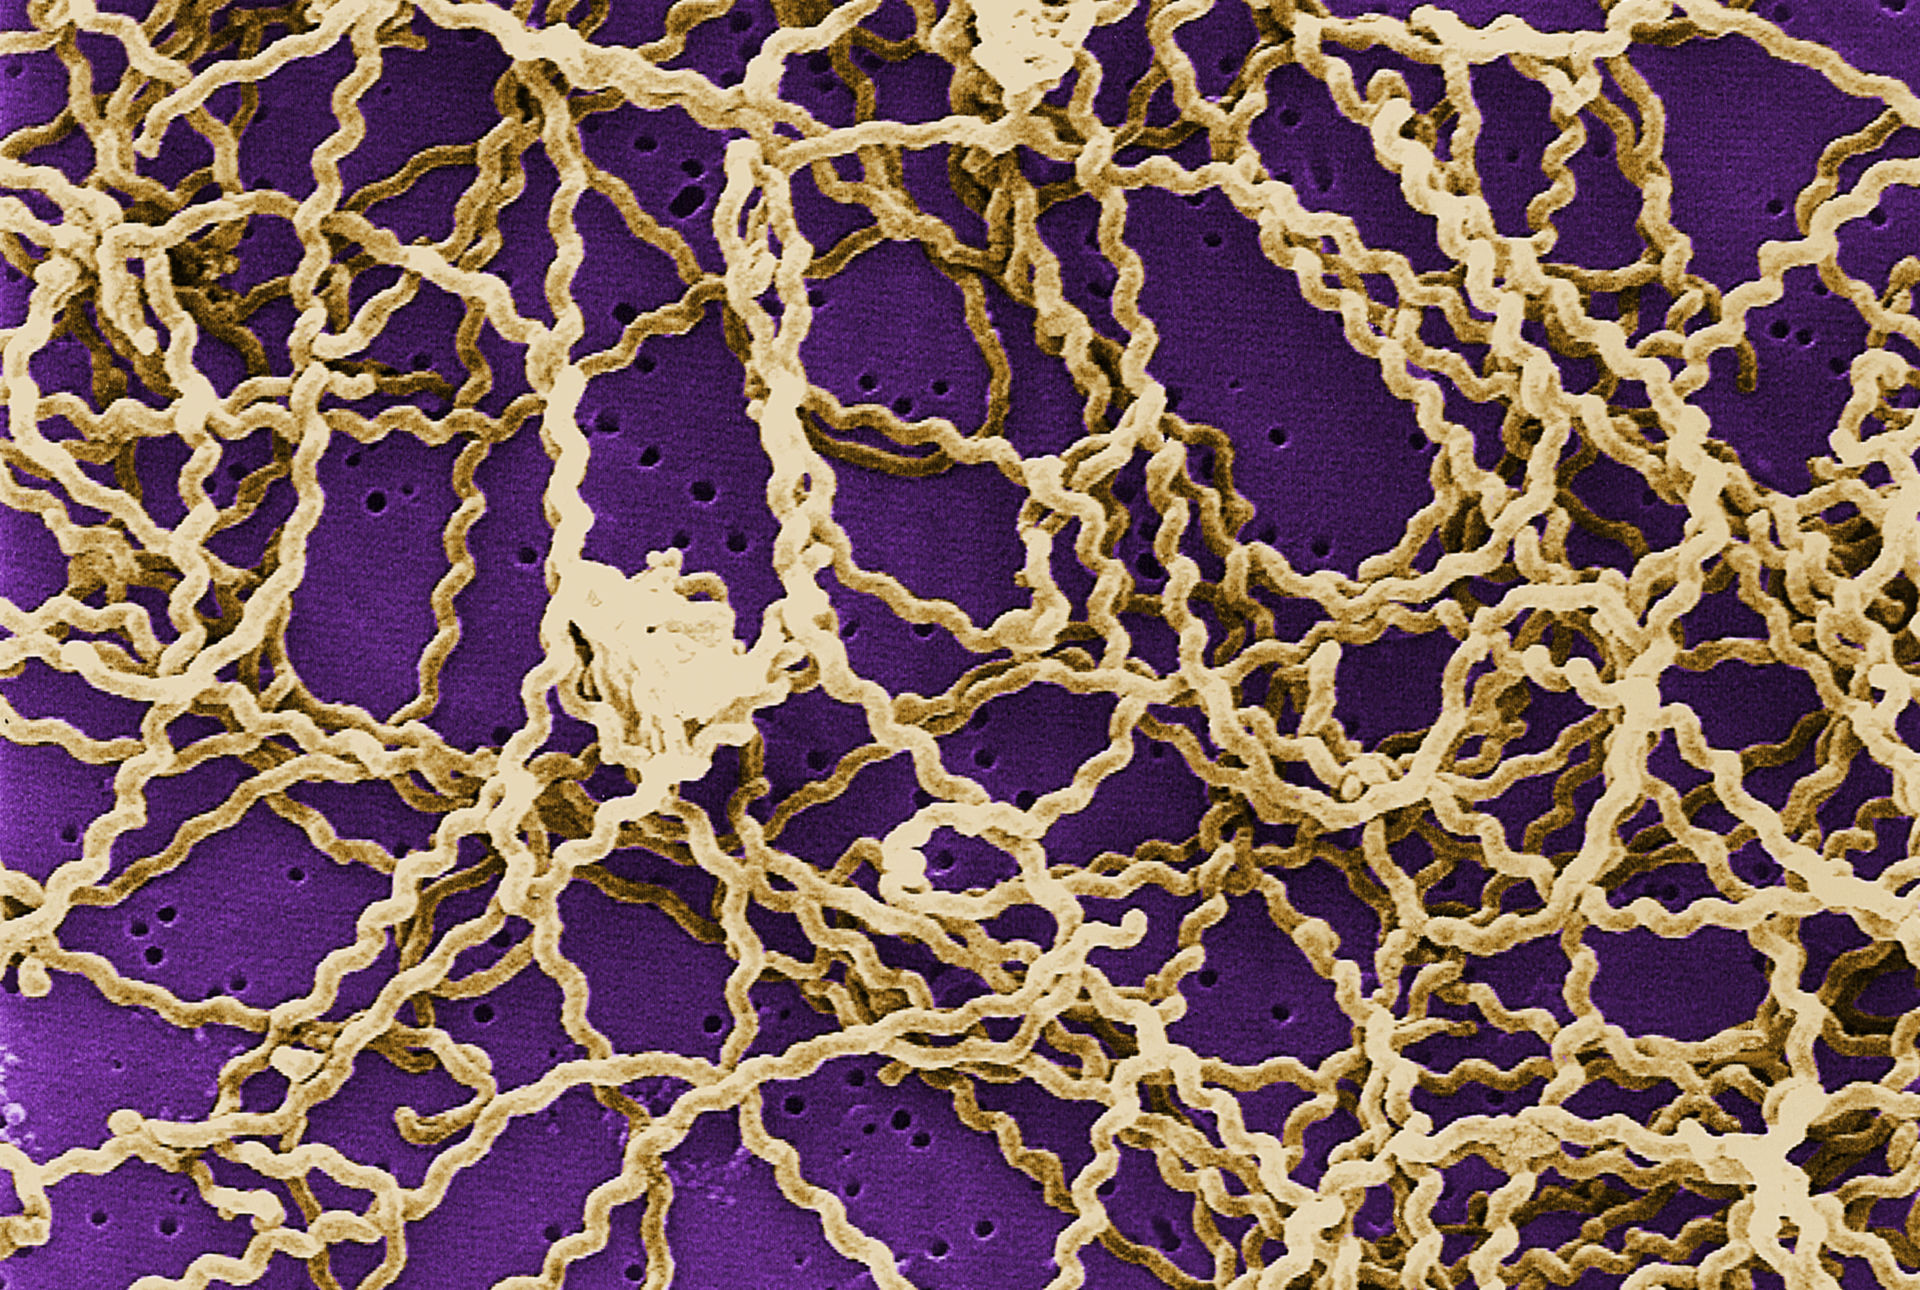 Leptospira sp. bacteria atop a 0.1. µm polycarbonate filter